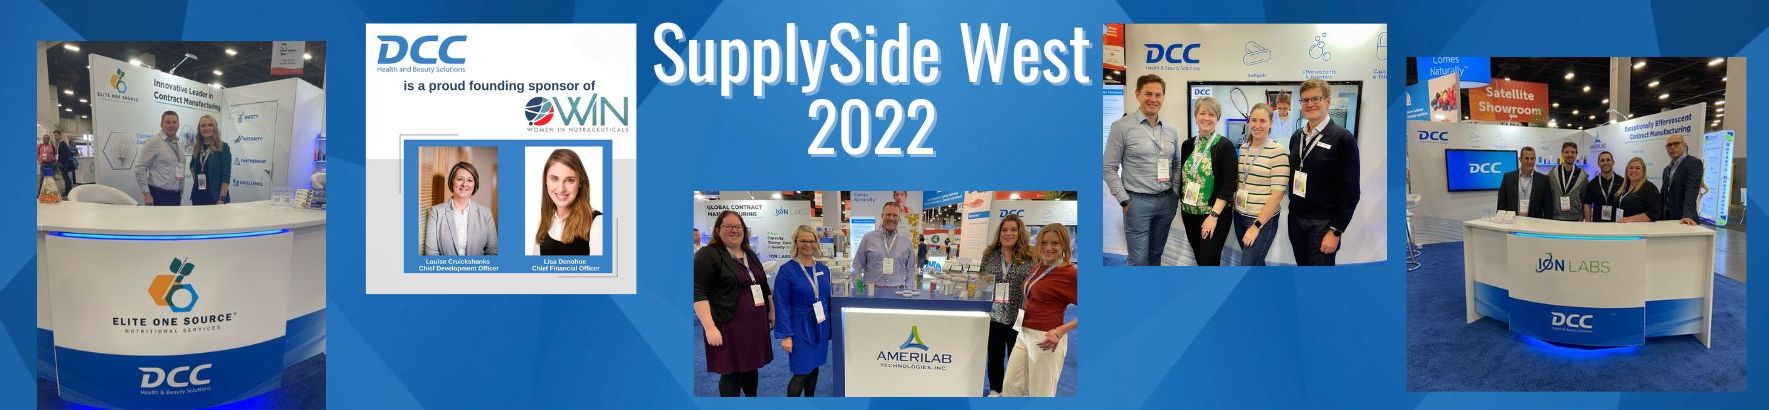 Post SupplySide West 2022 